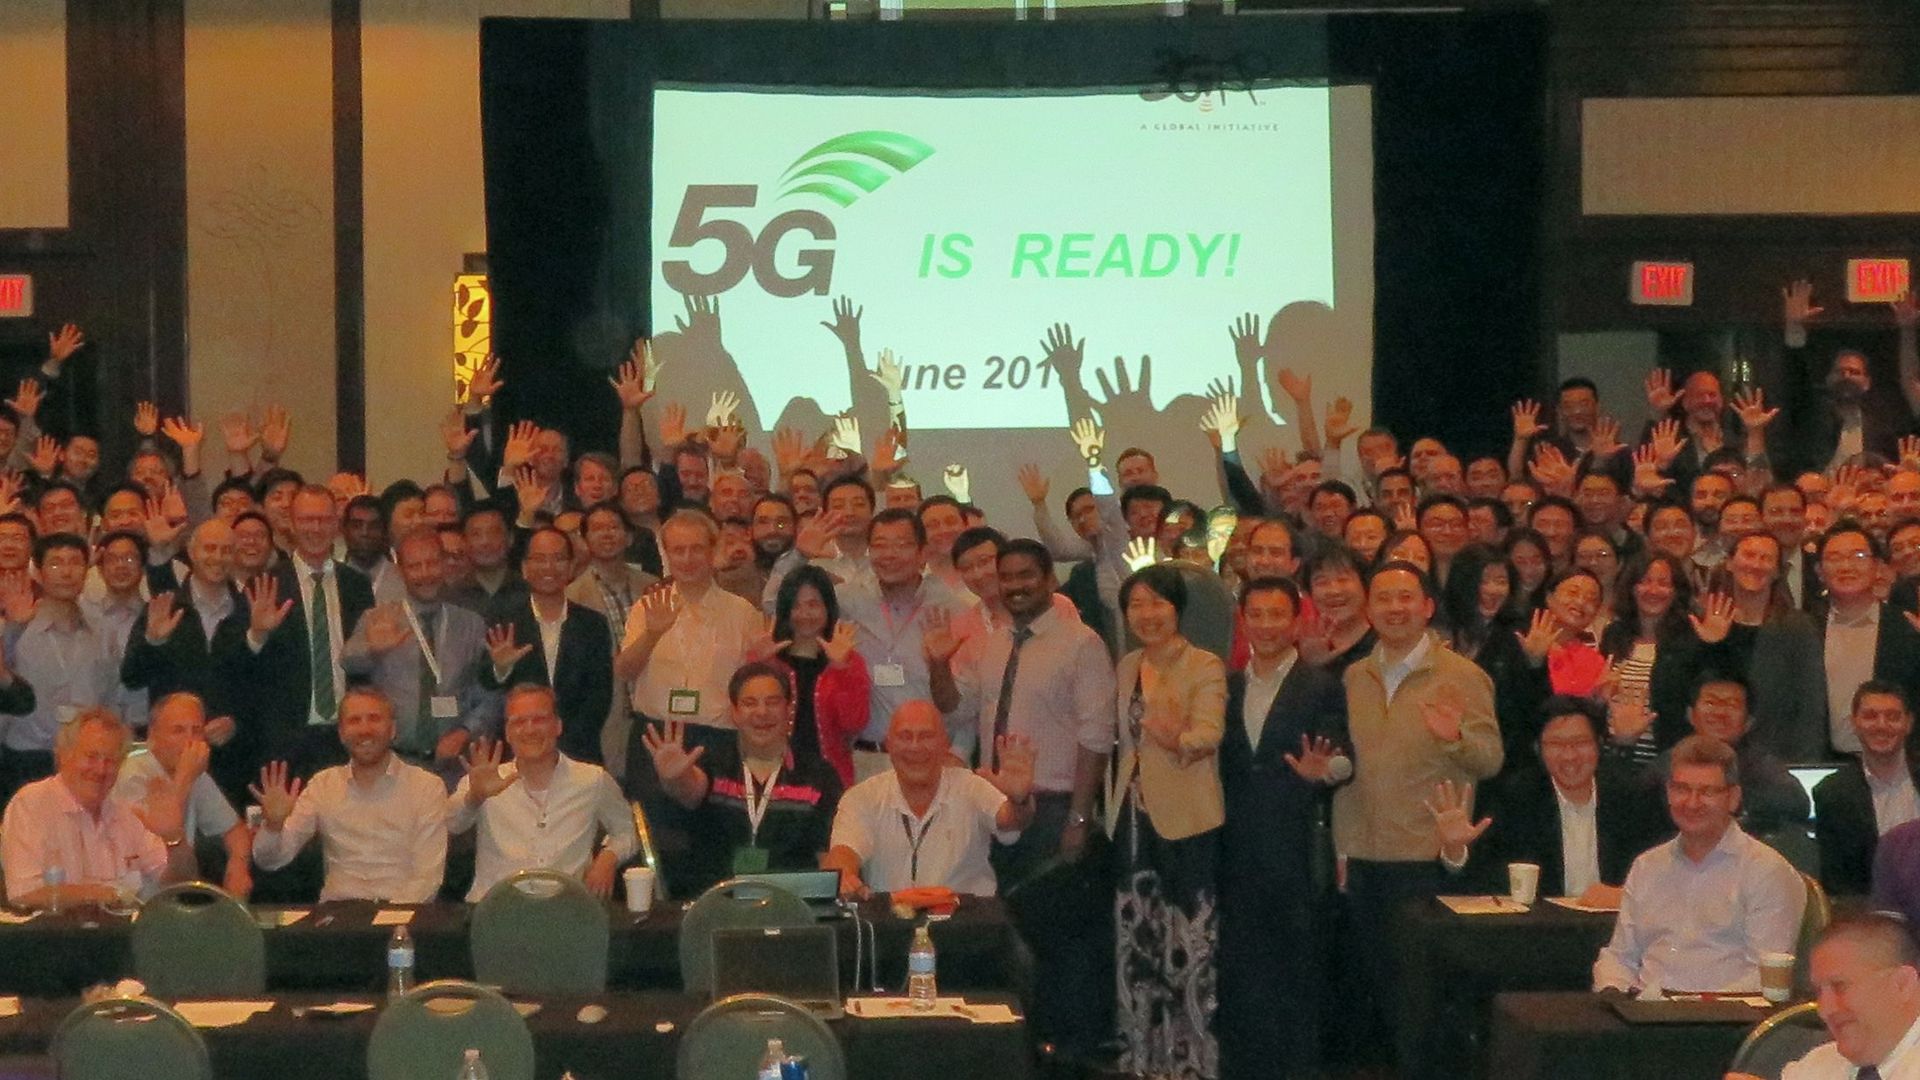 Group photo from last week's 5G meeting in La Jolla, Calif.